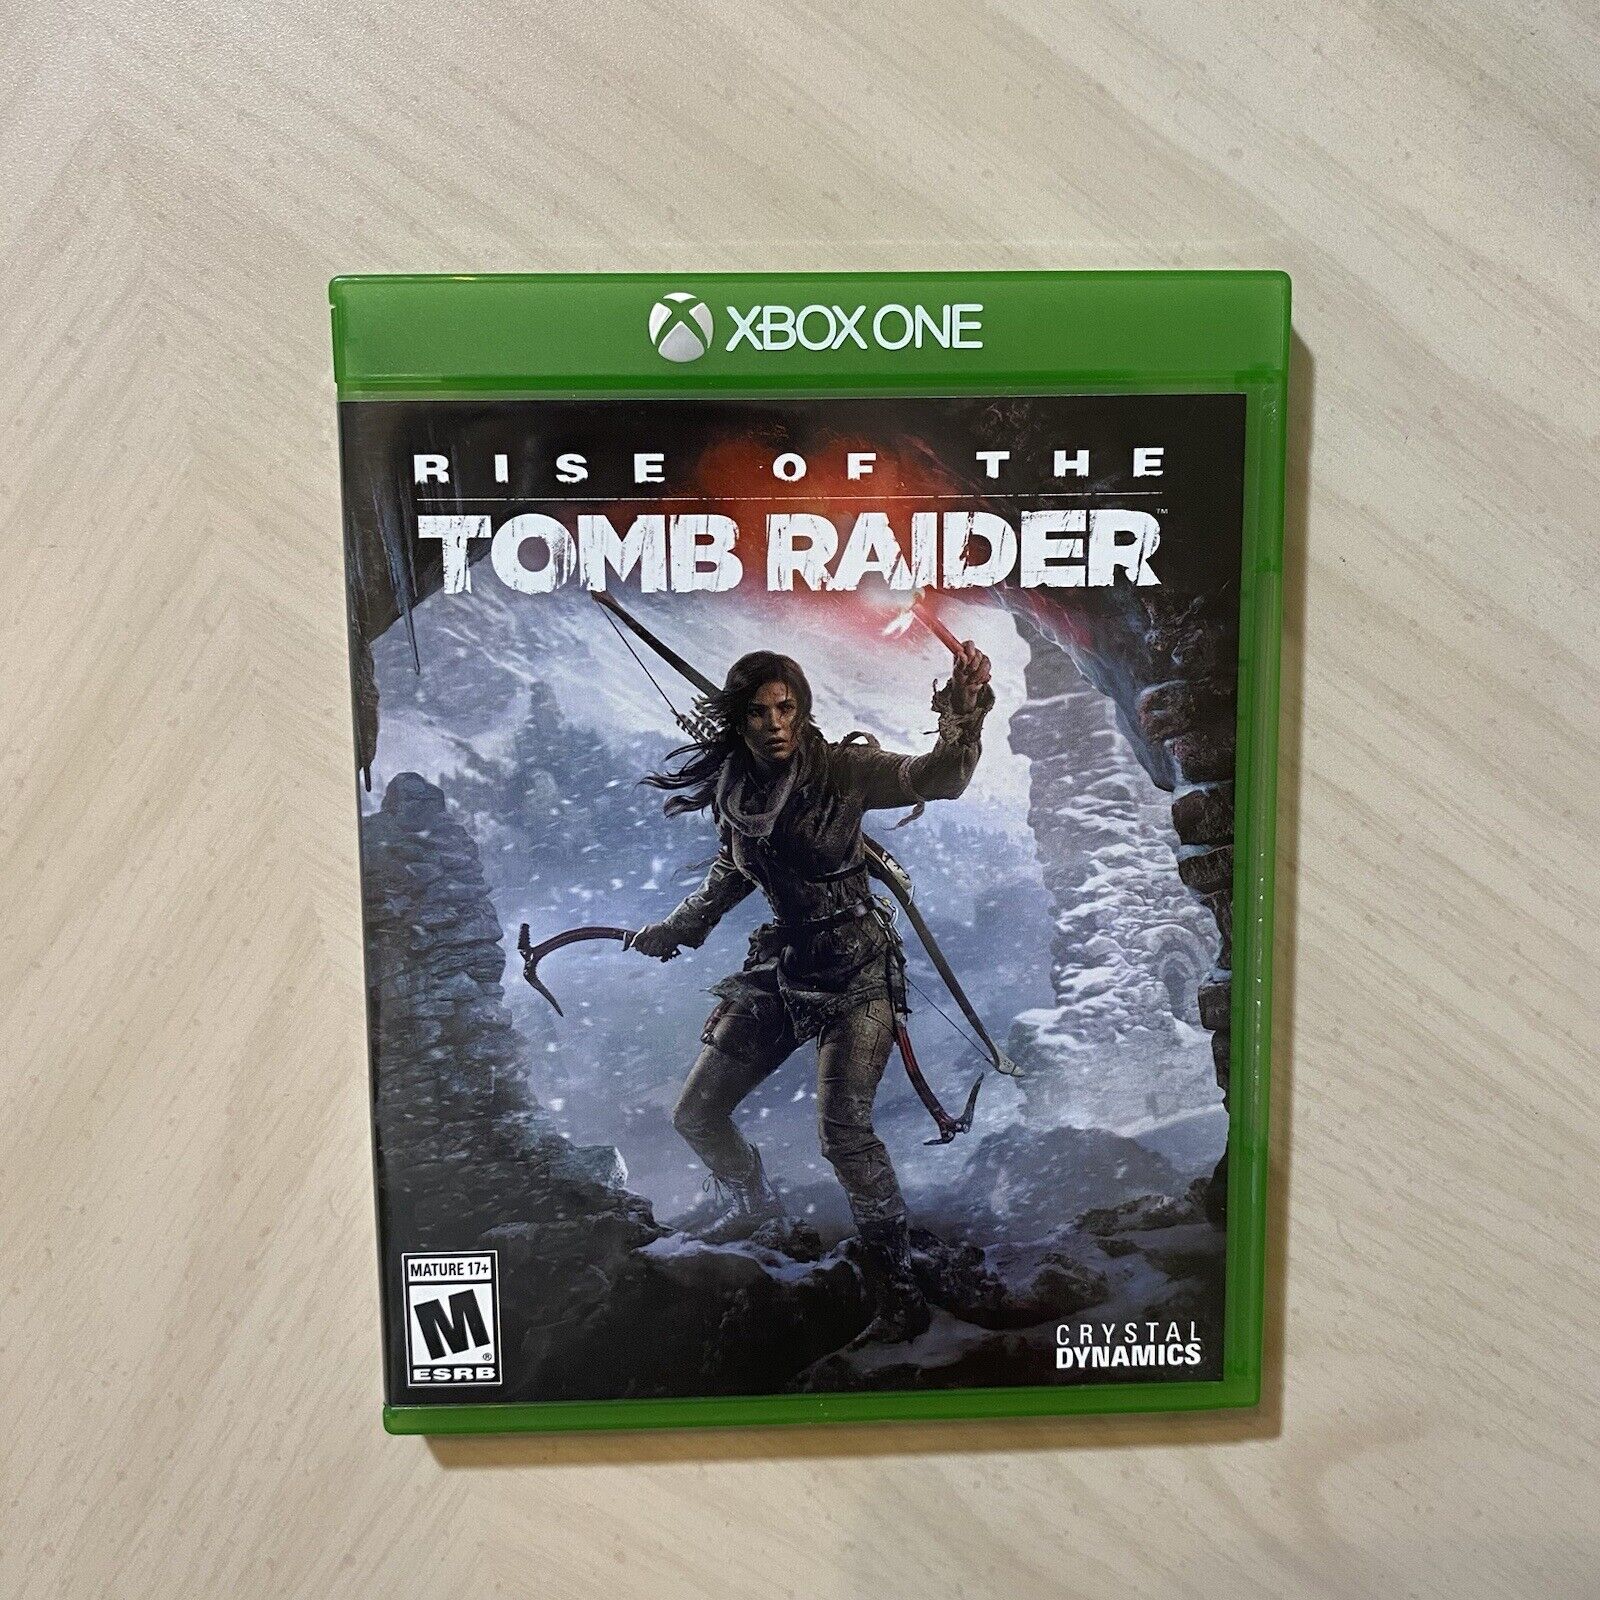 Rise of the Tomb Raider (Microsoft Xbox One, 2015)